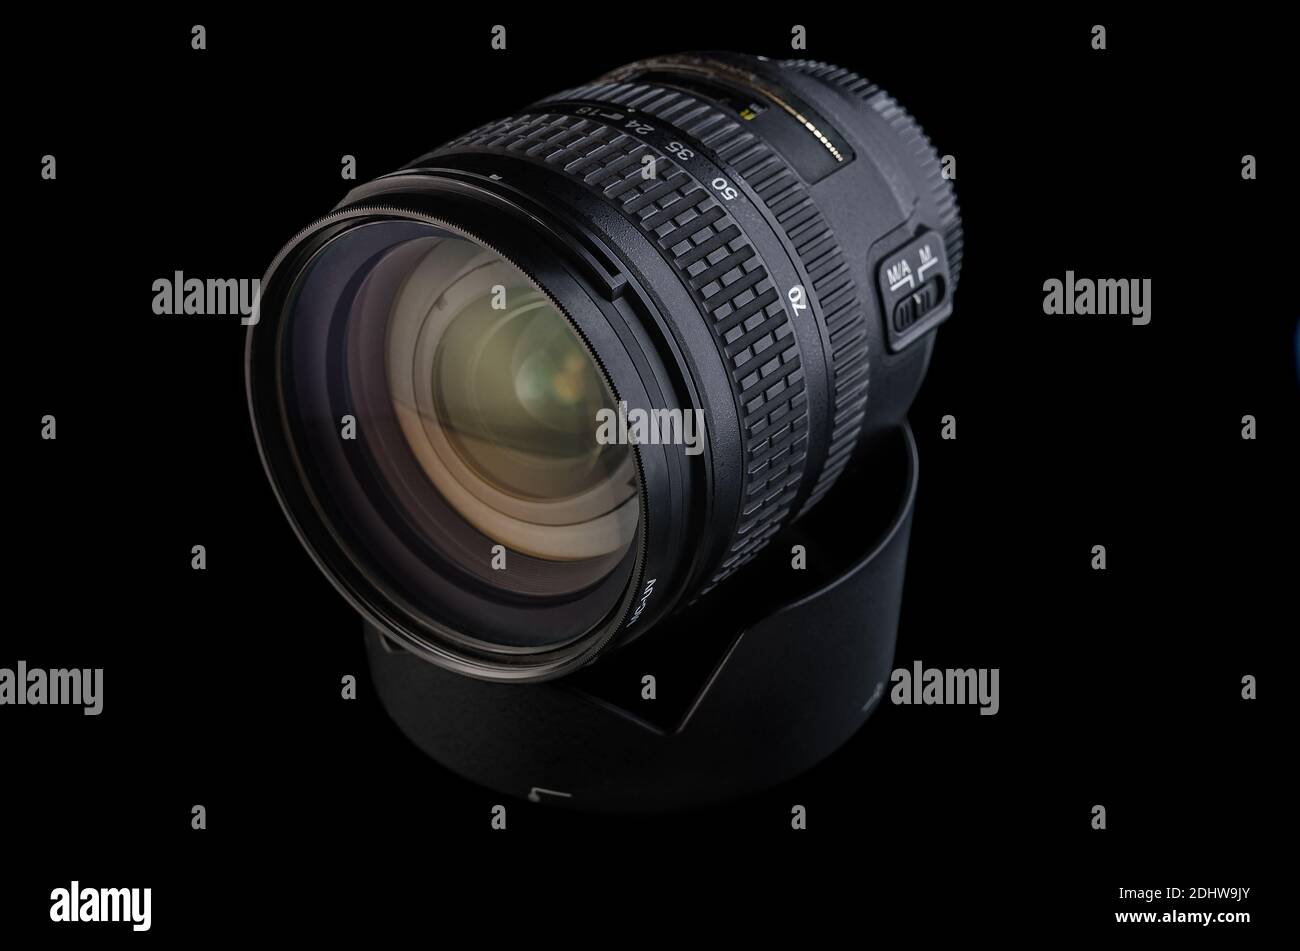 camera lens  on a black background Stock Photo